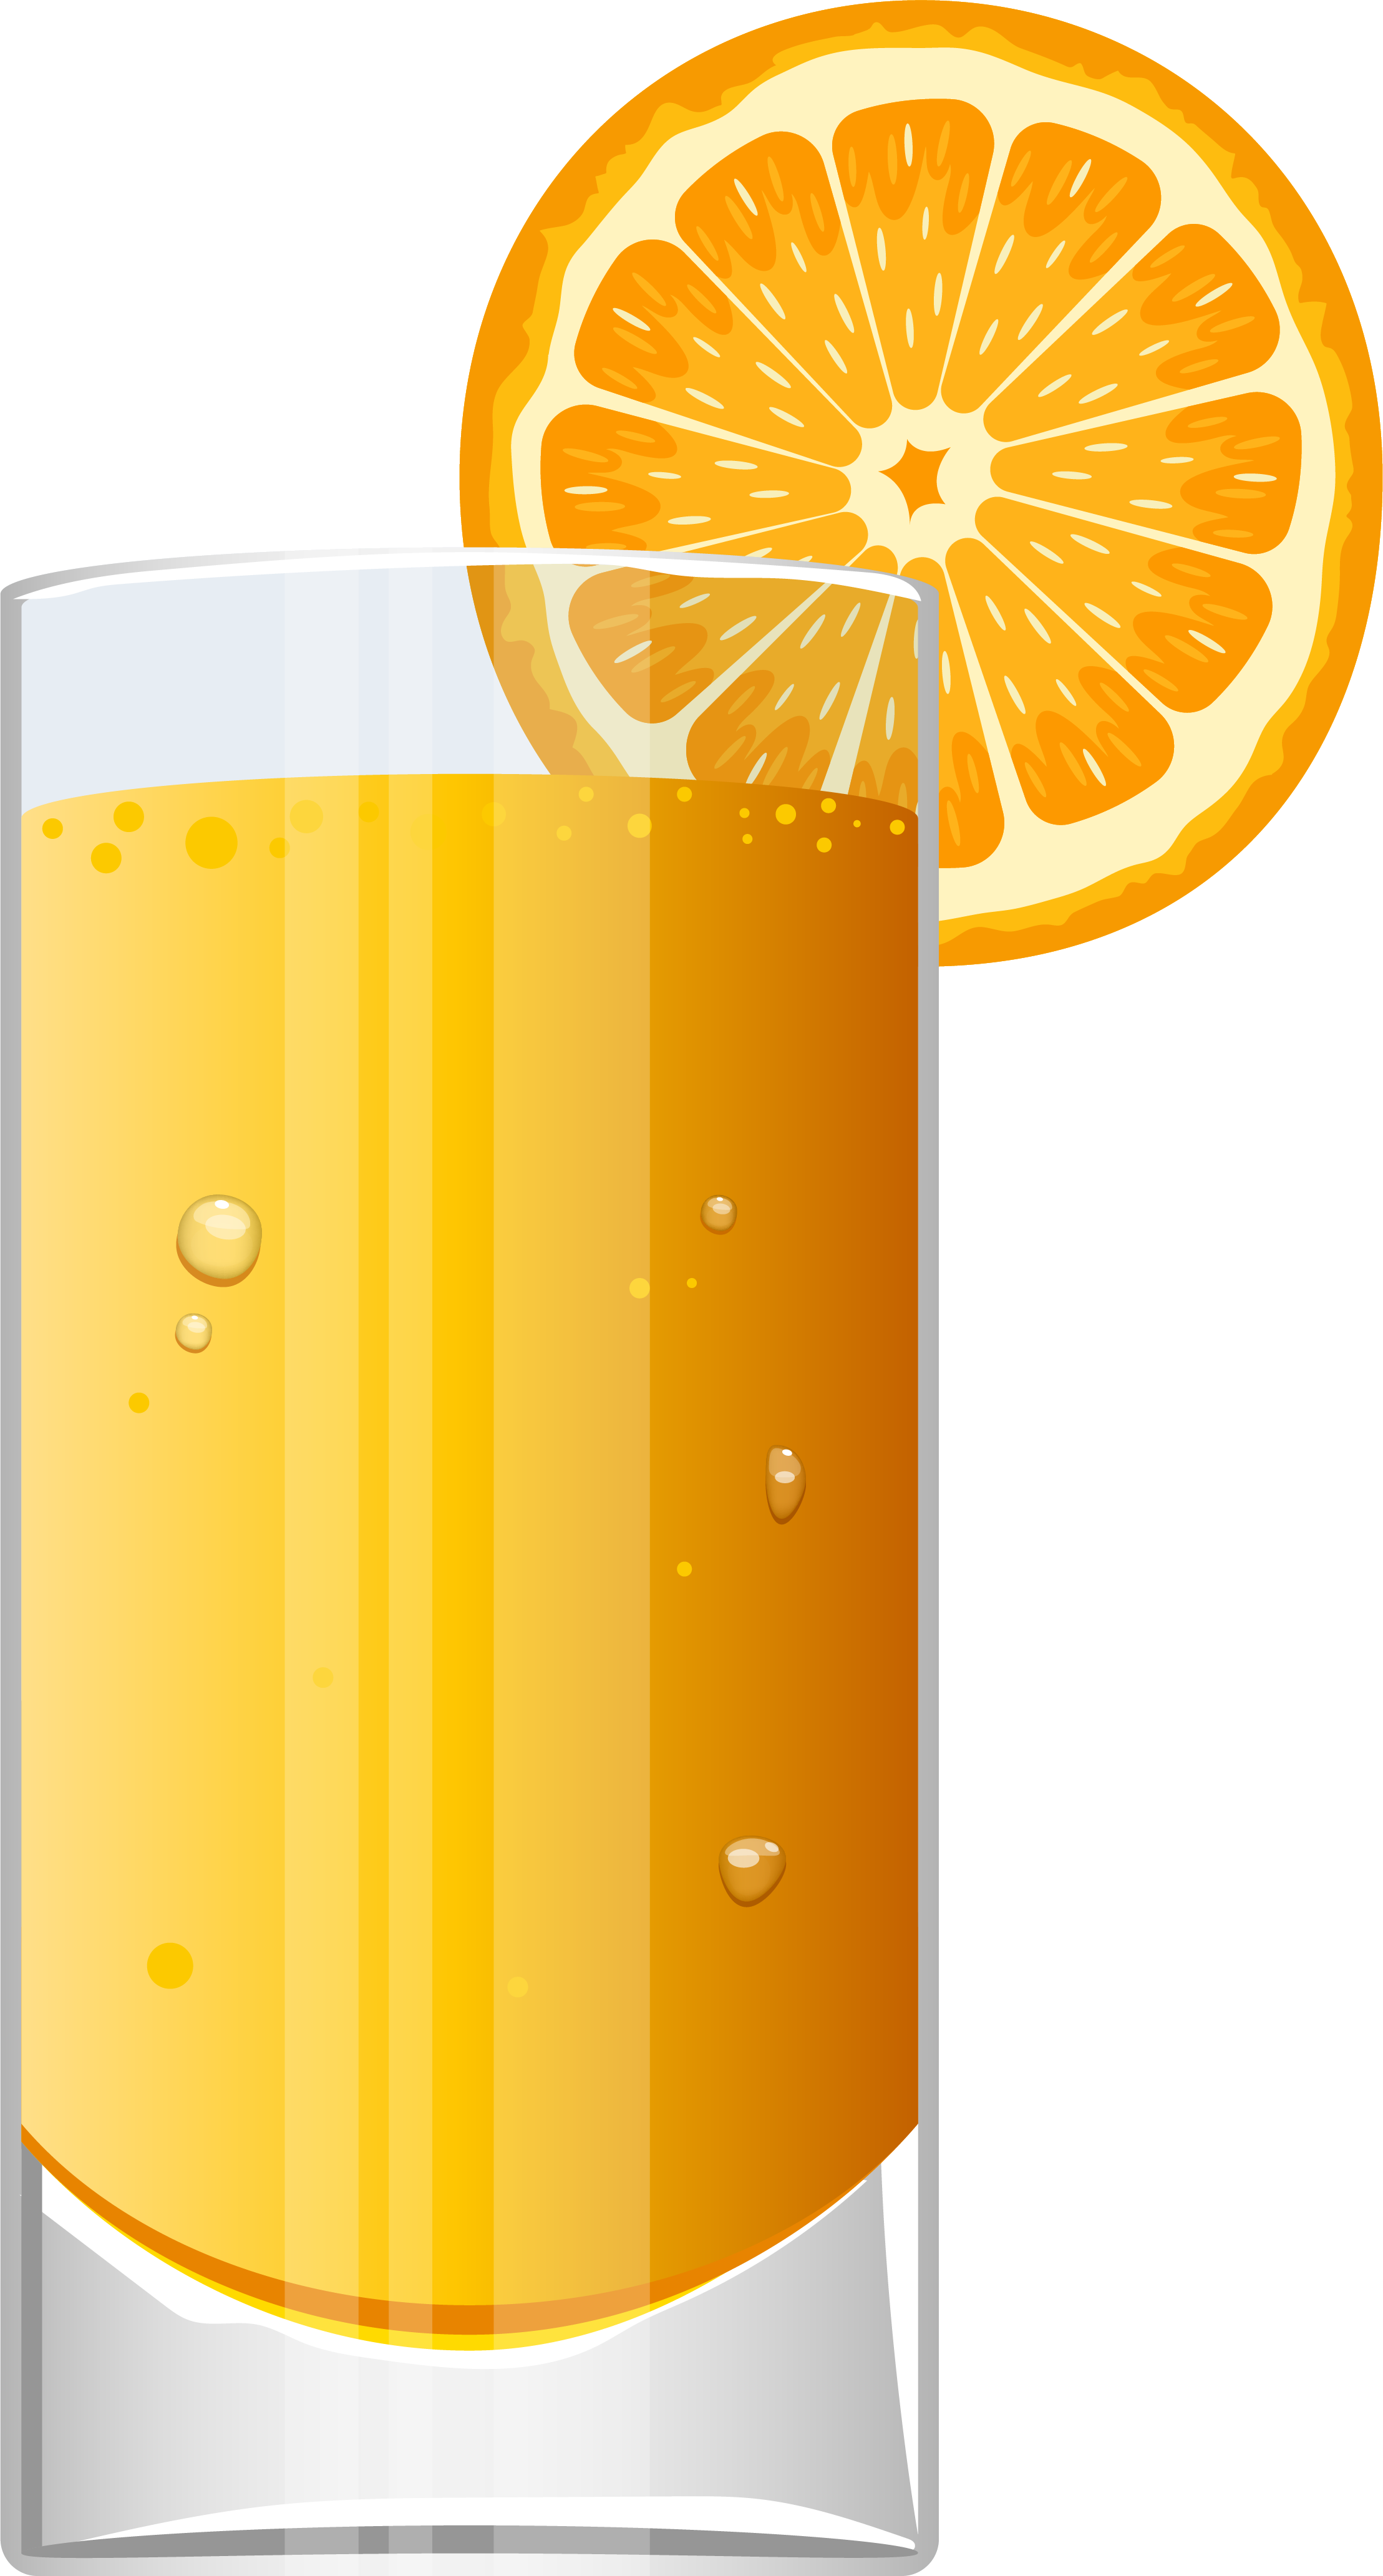 vecteezy_glass-of-fresh-juice-clipart-design-illustration_9383650_81.png